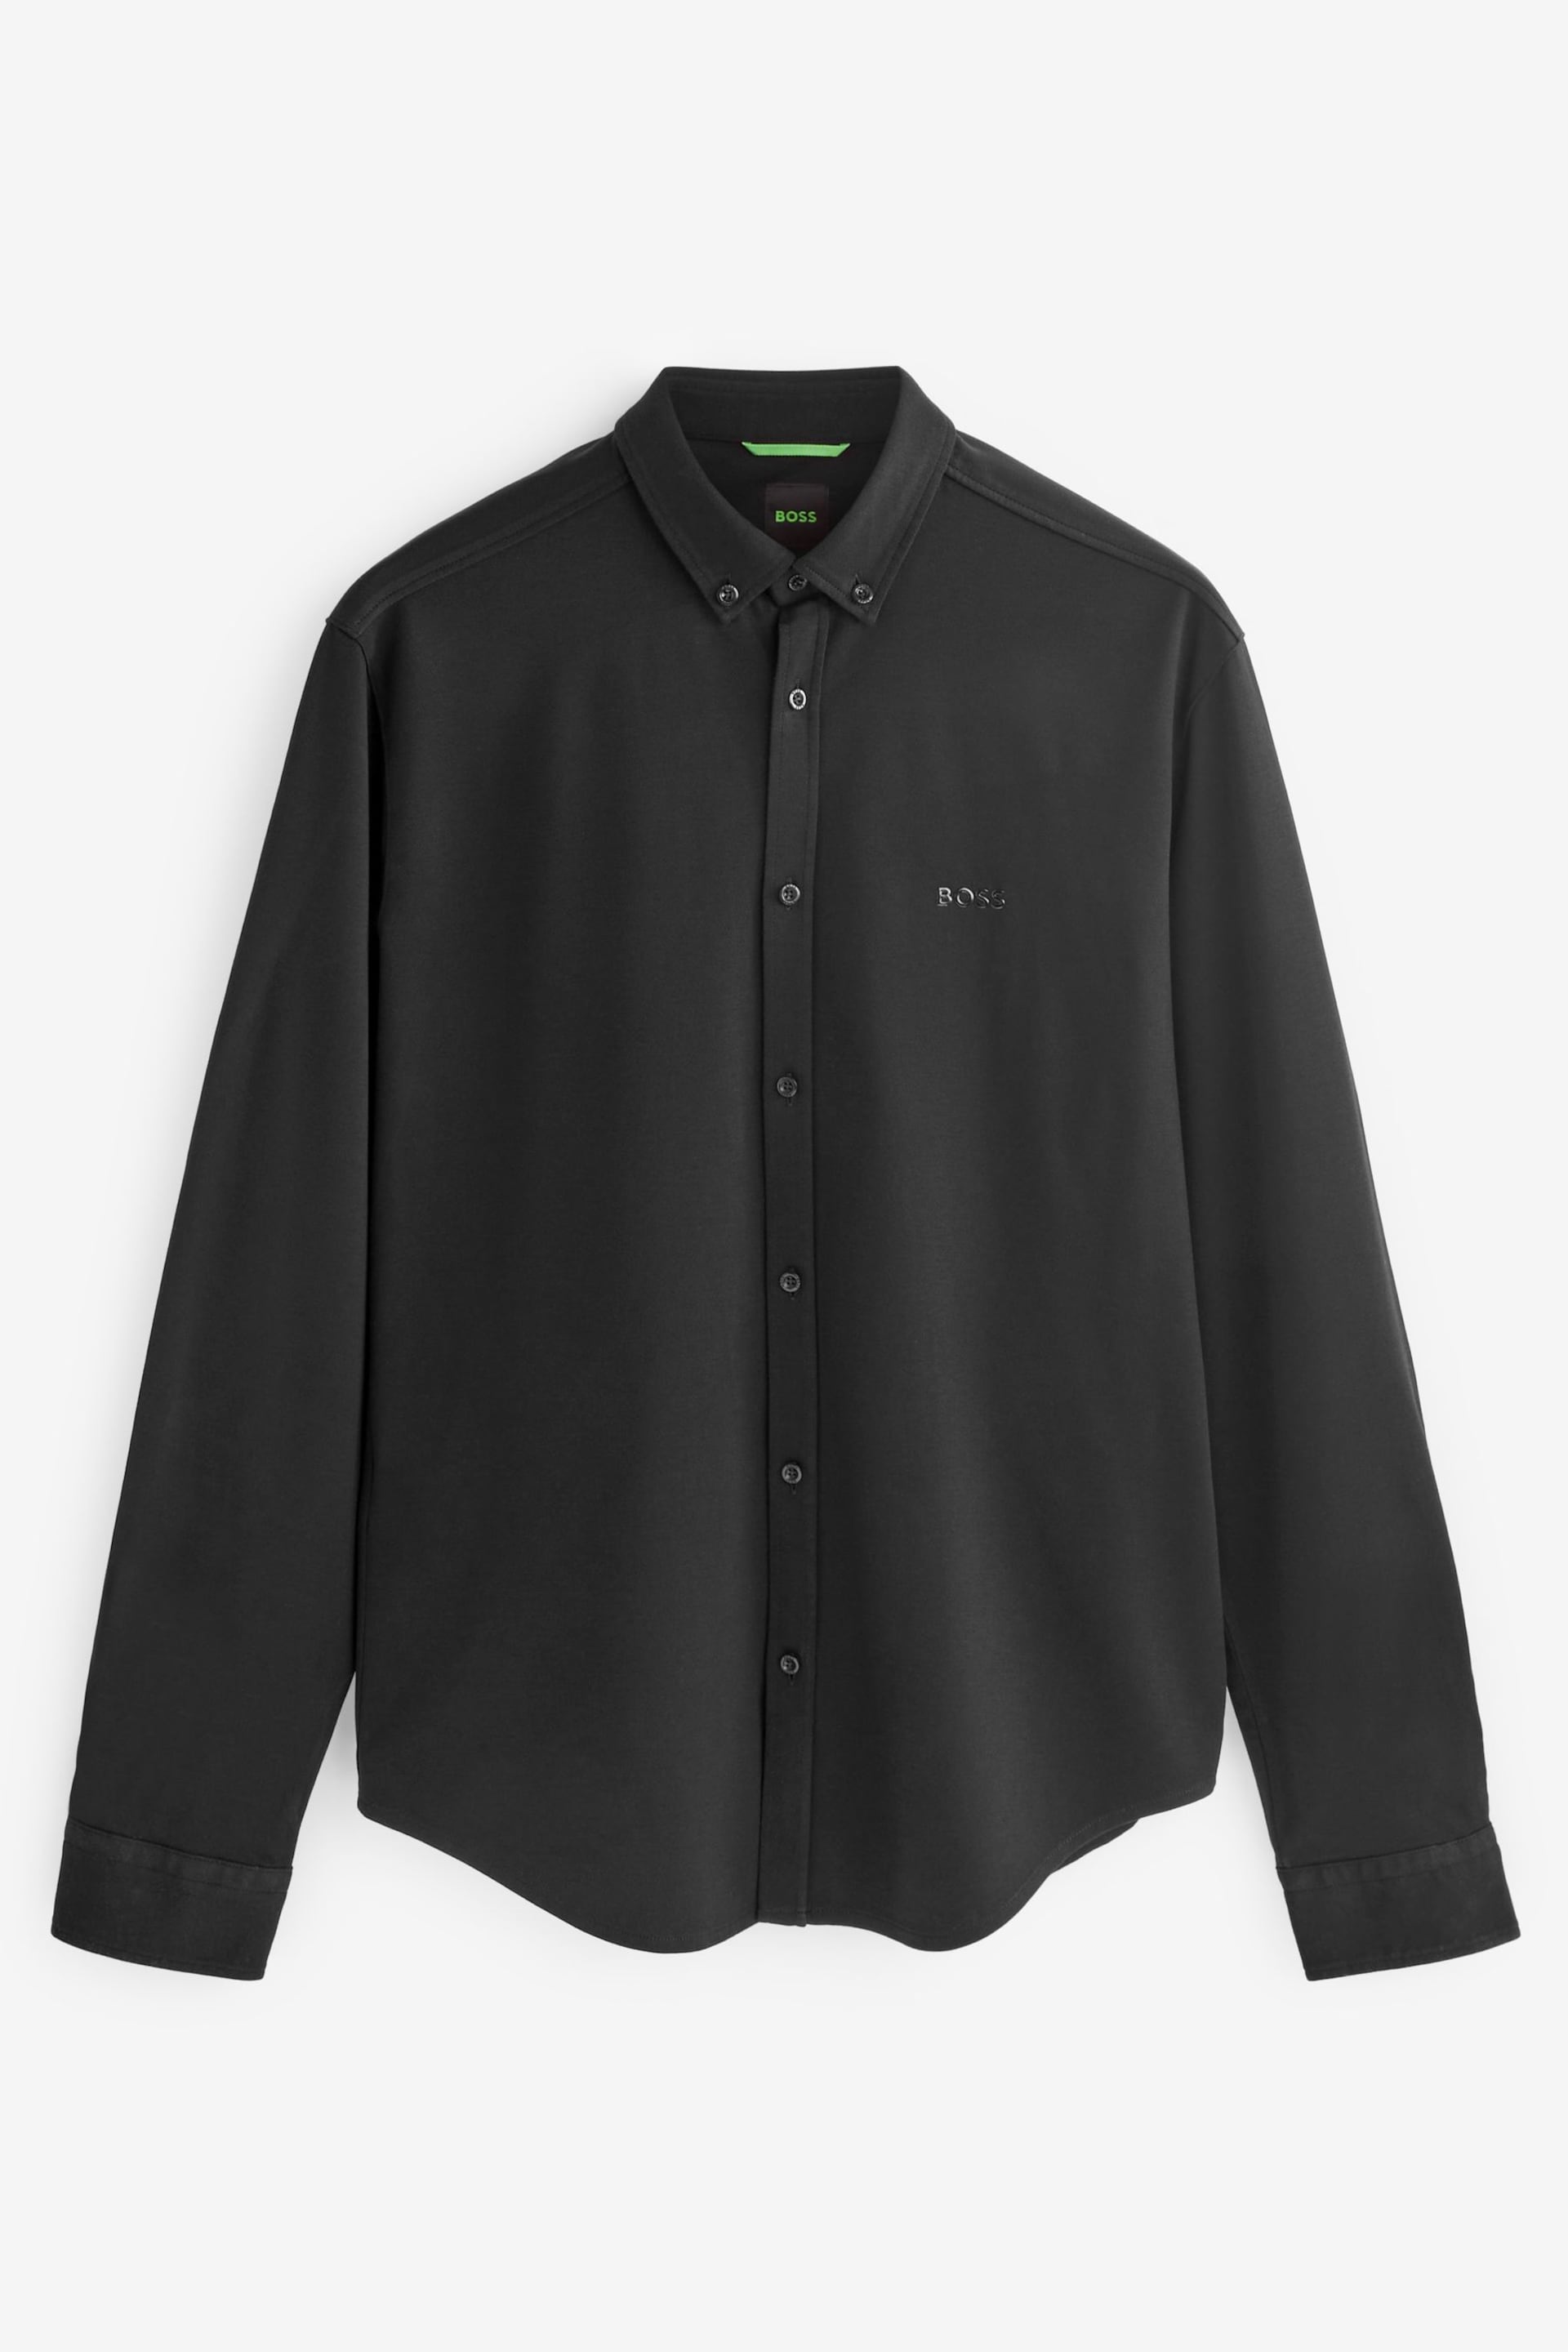 BOSS Black Biado Long Sleeve Jersey Shirt - Image 6 of 6